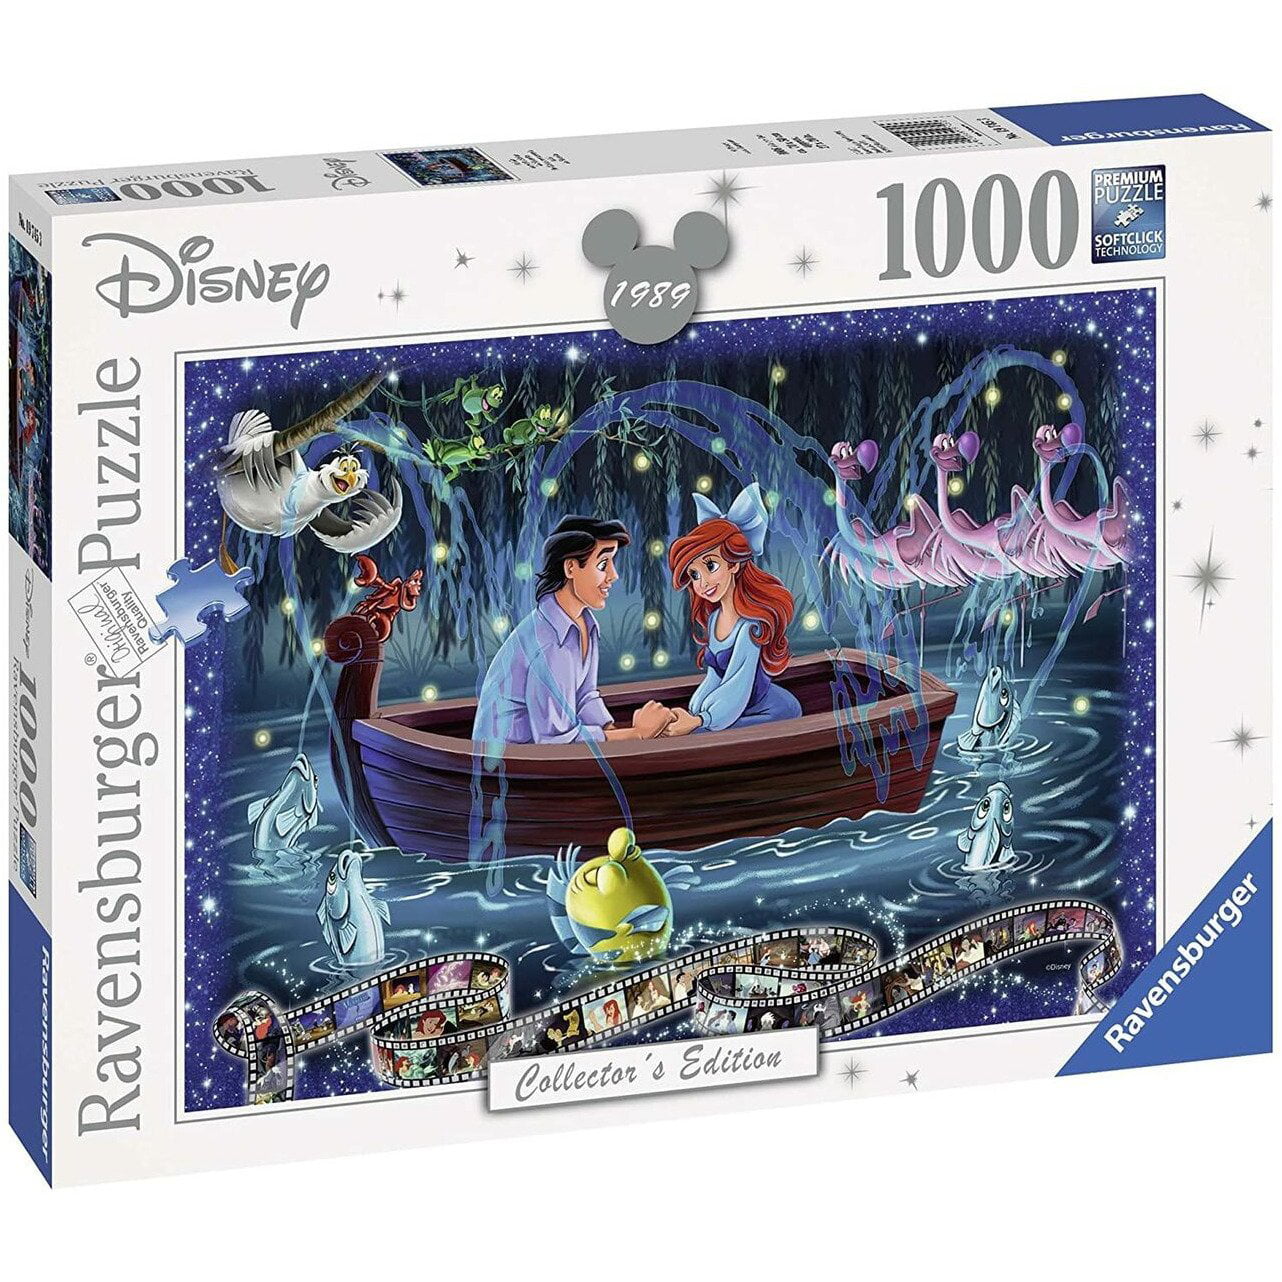 1000 Teile Ravensburger Puzzle Disney Collector's Edition Cinderella 19678 